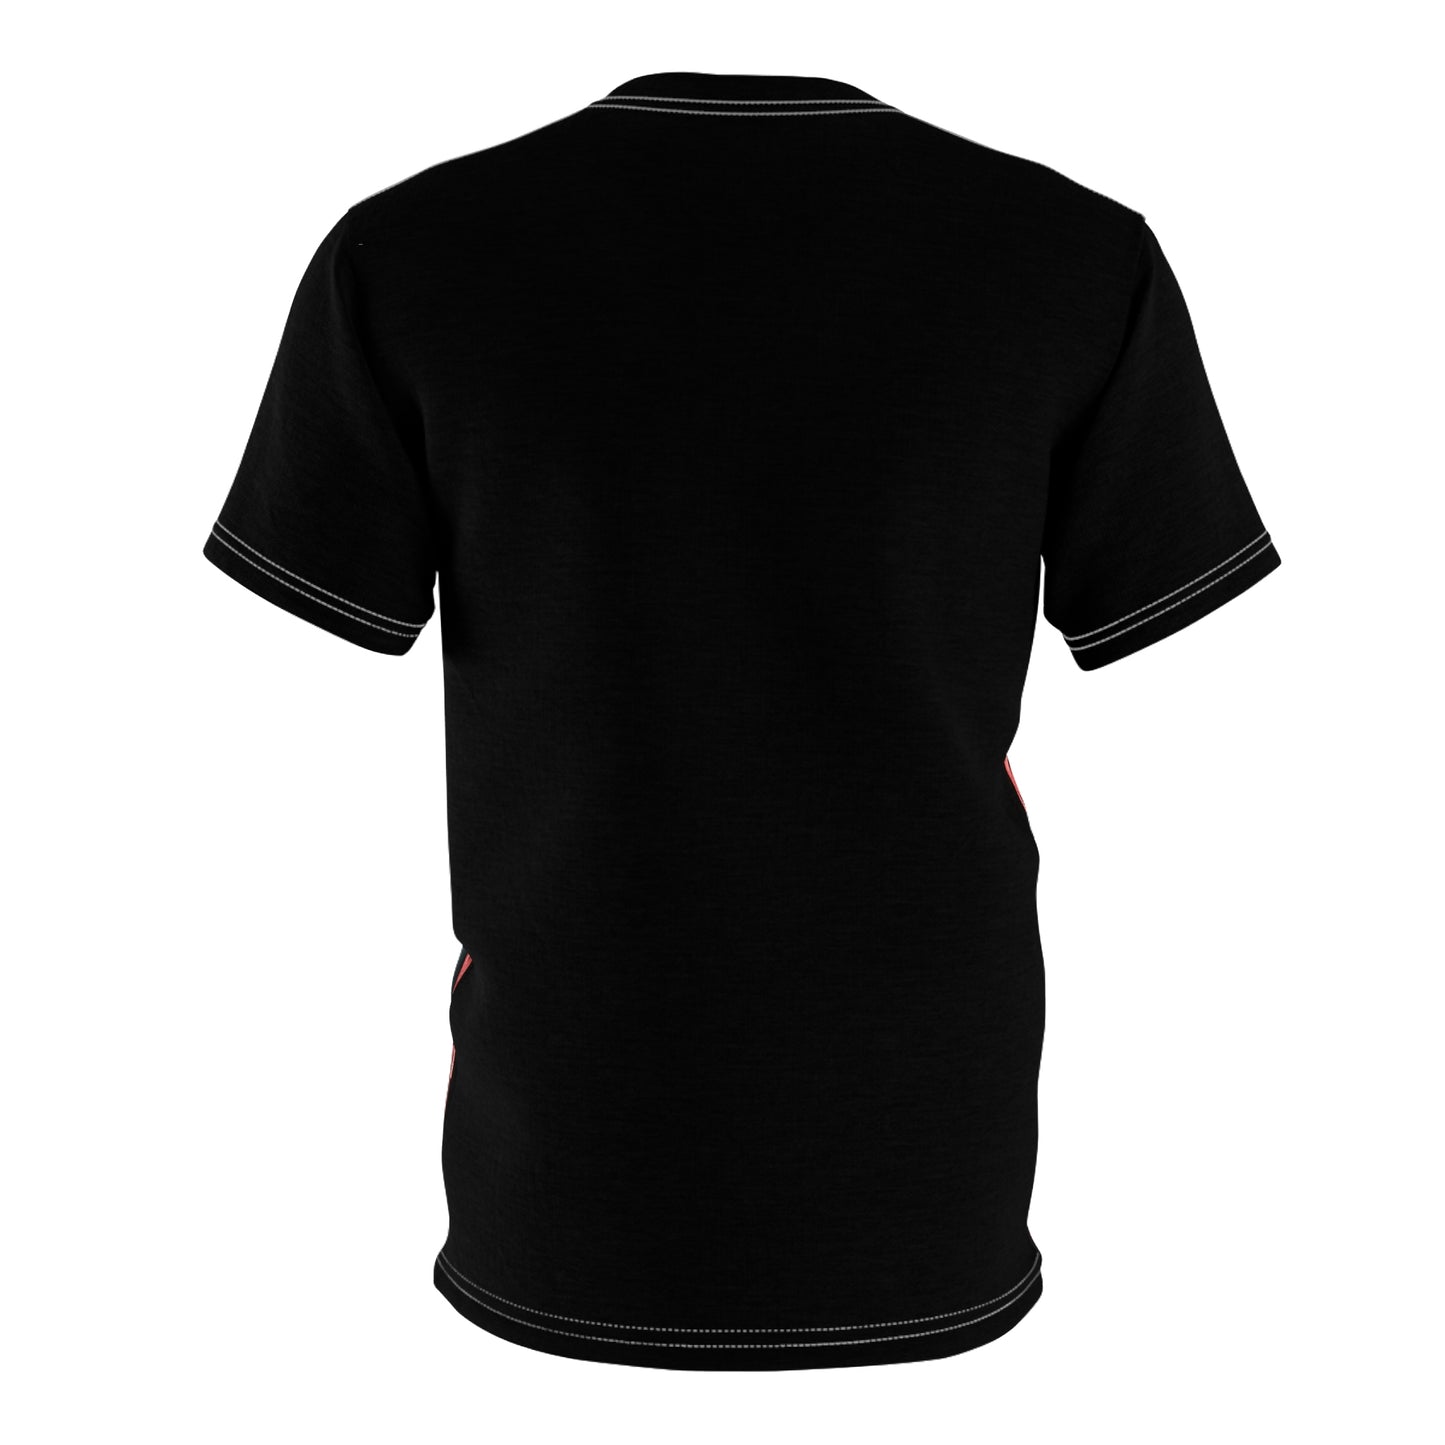 Thanátou - Unisex All-Over Print Cut & Sew T-Shirt